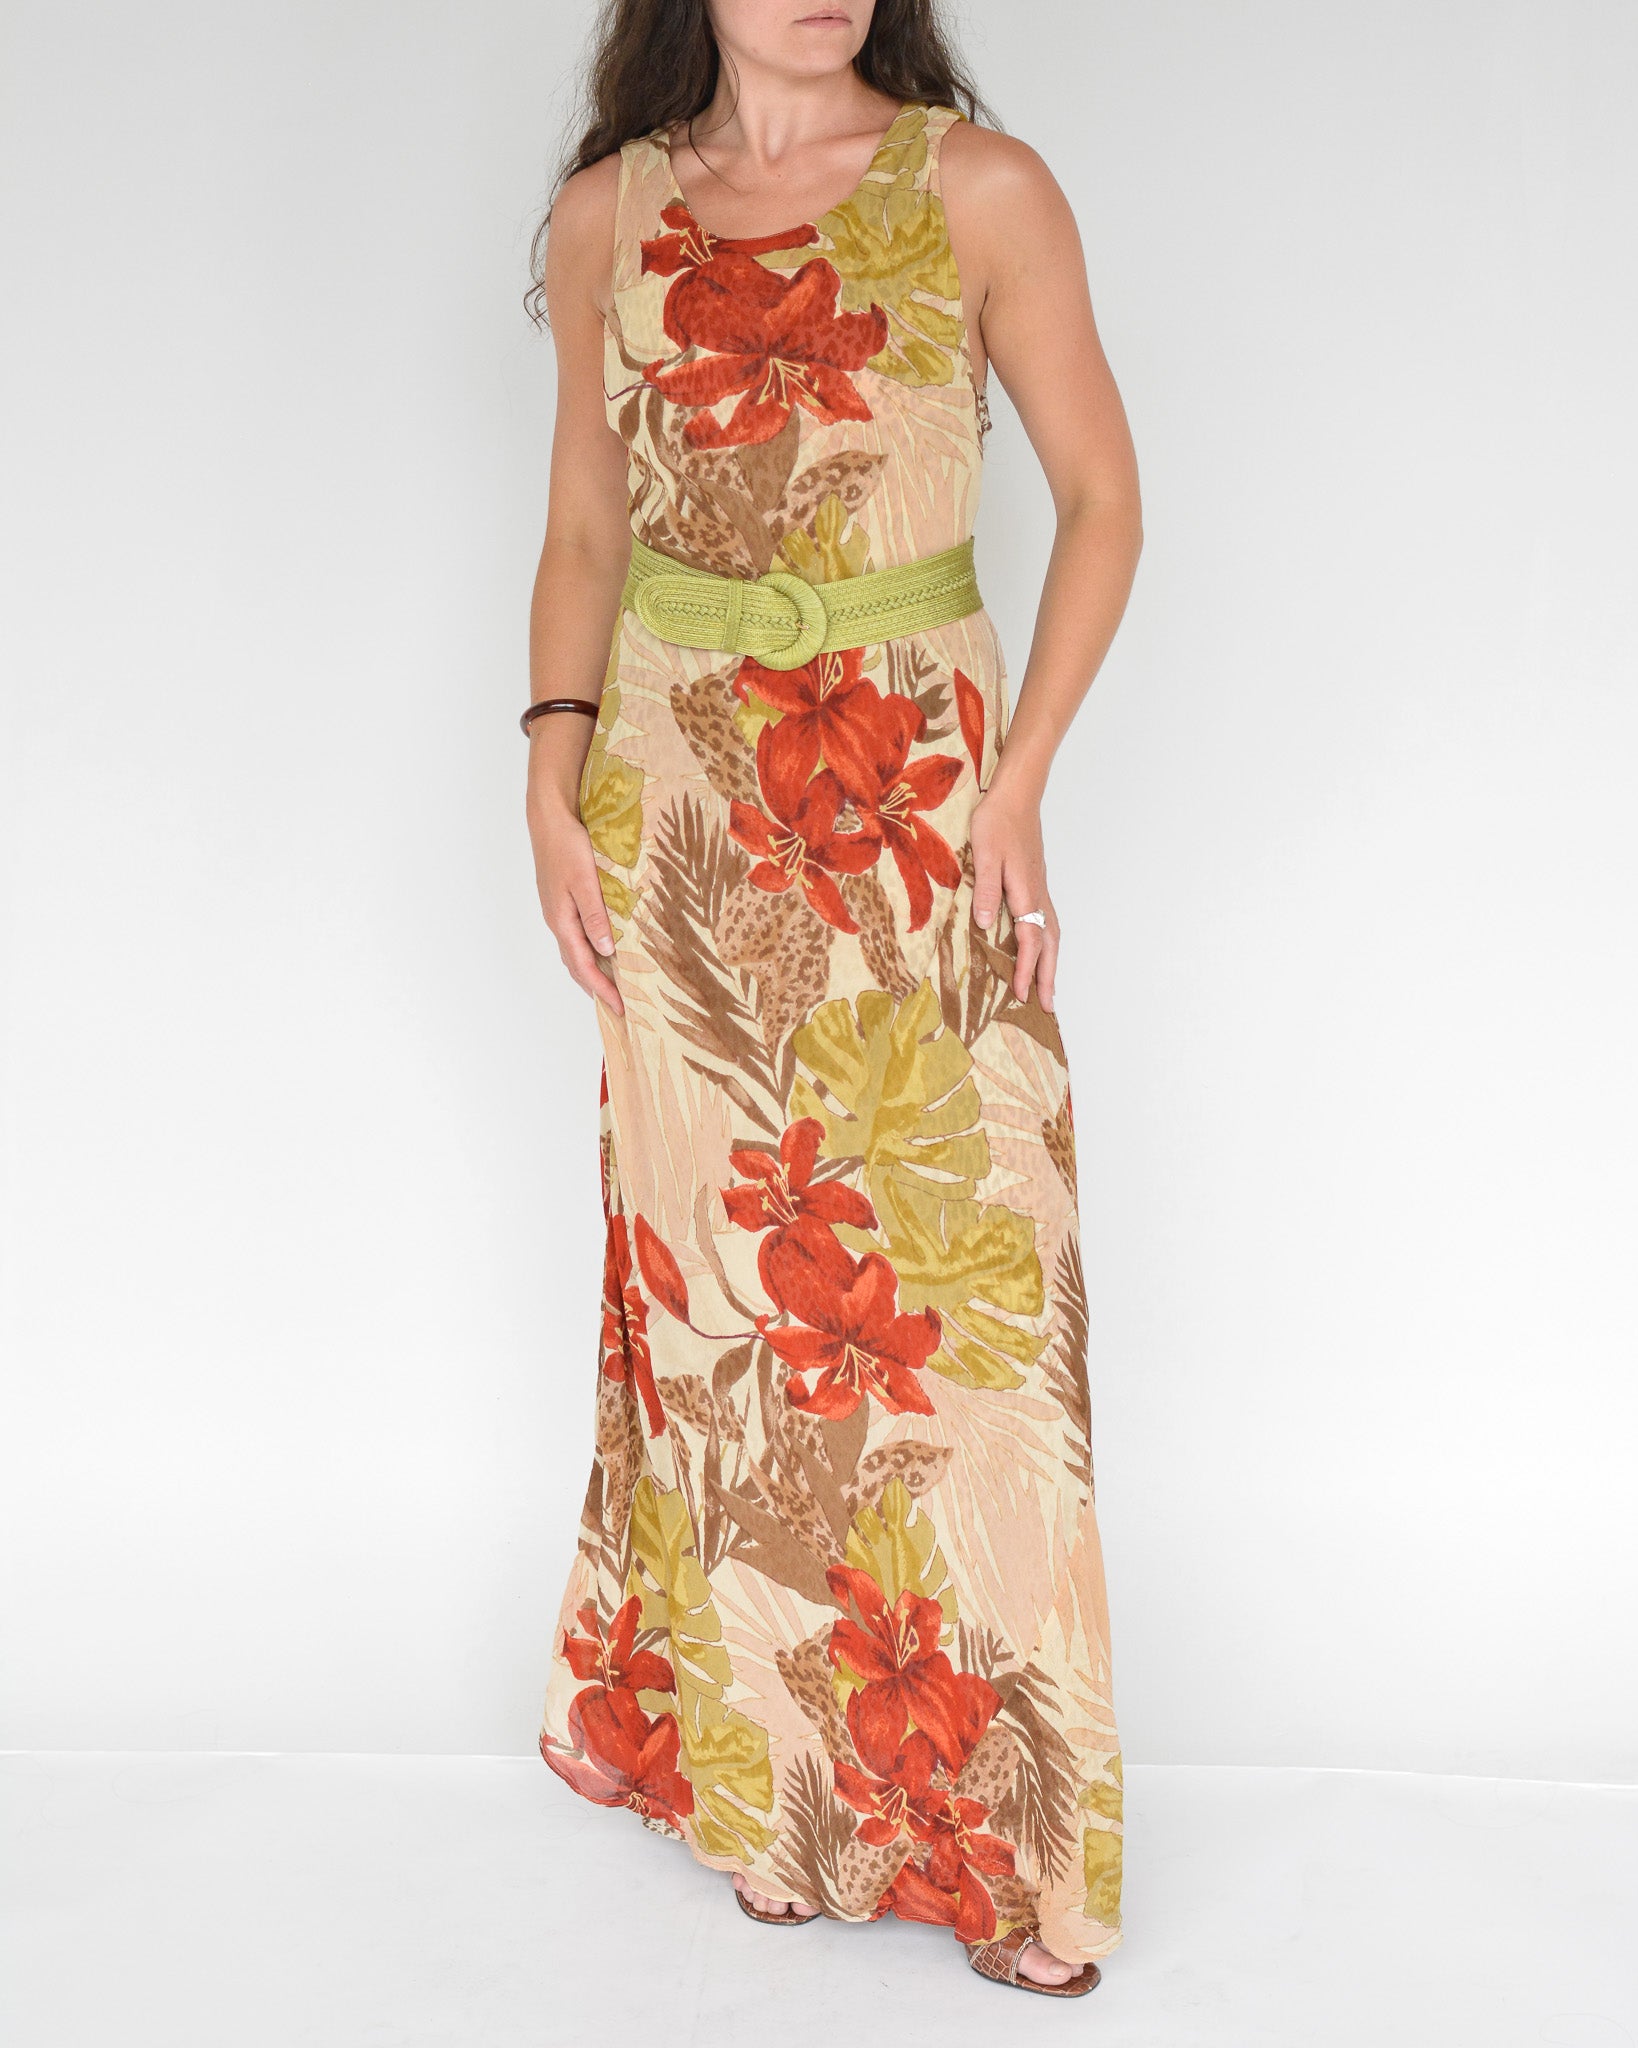 Vintage tropical flower print layered long maxi dress.